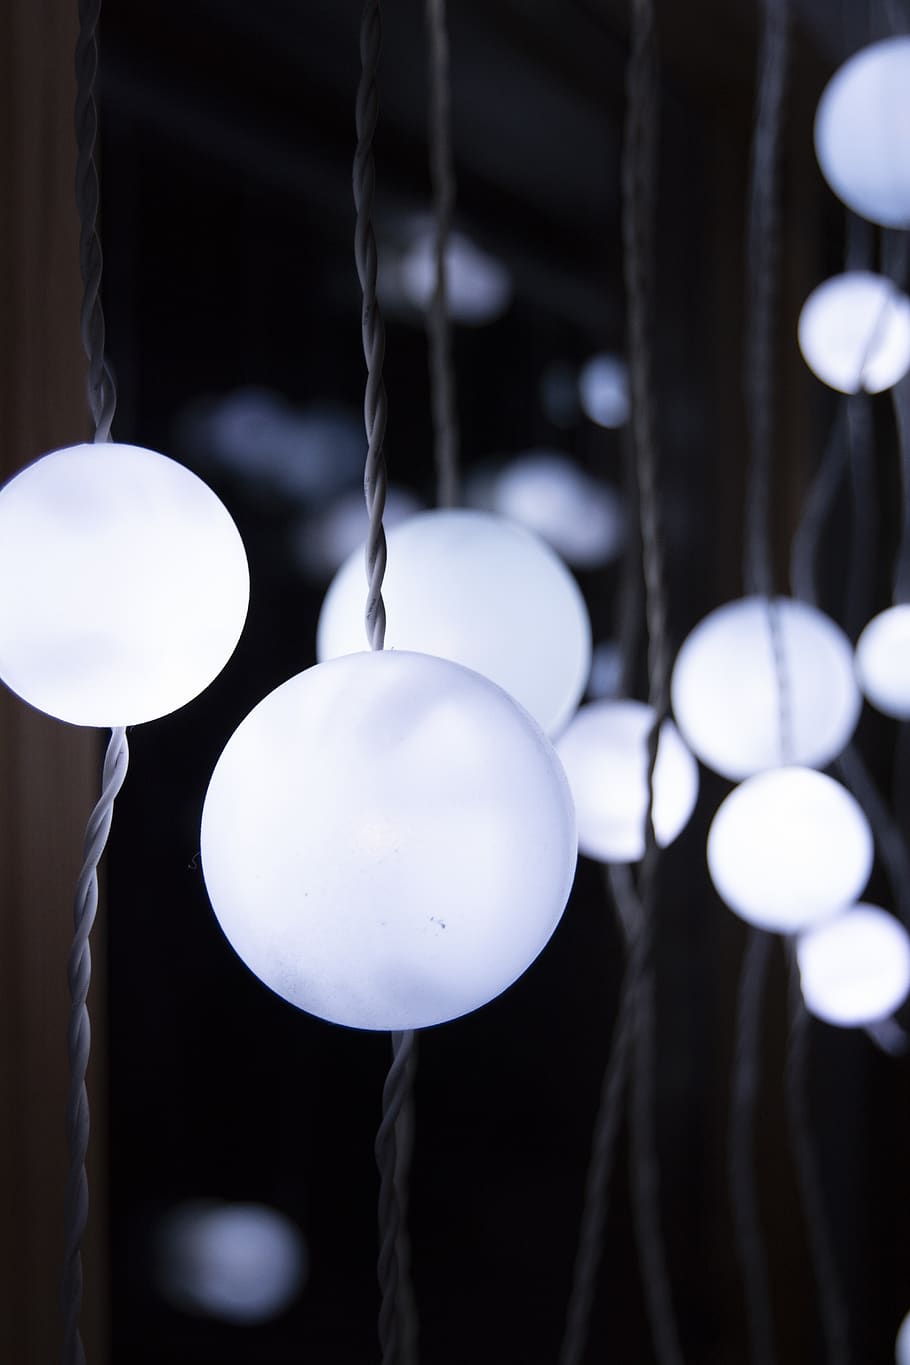 glow, balls, sphere, light, decoration, round, orb, hanging, lighting equipment, illuminated